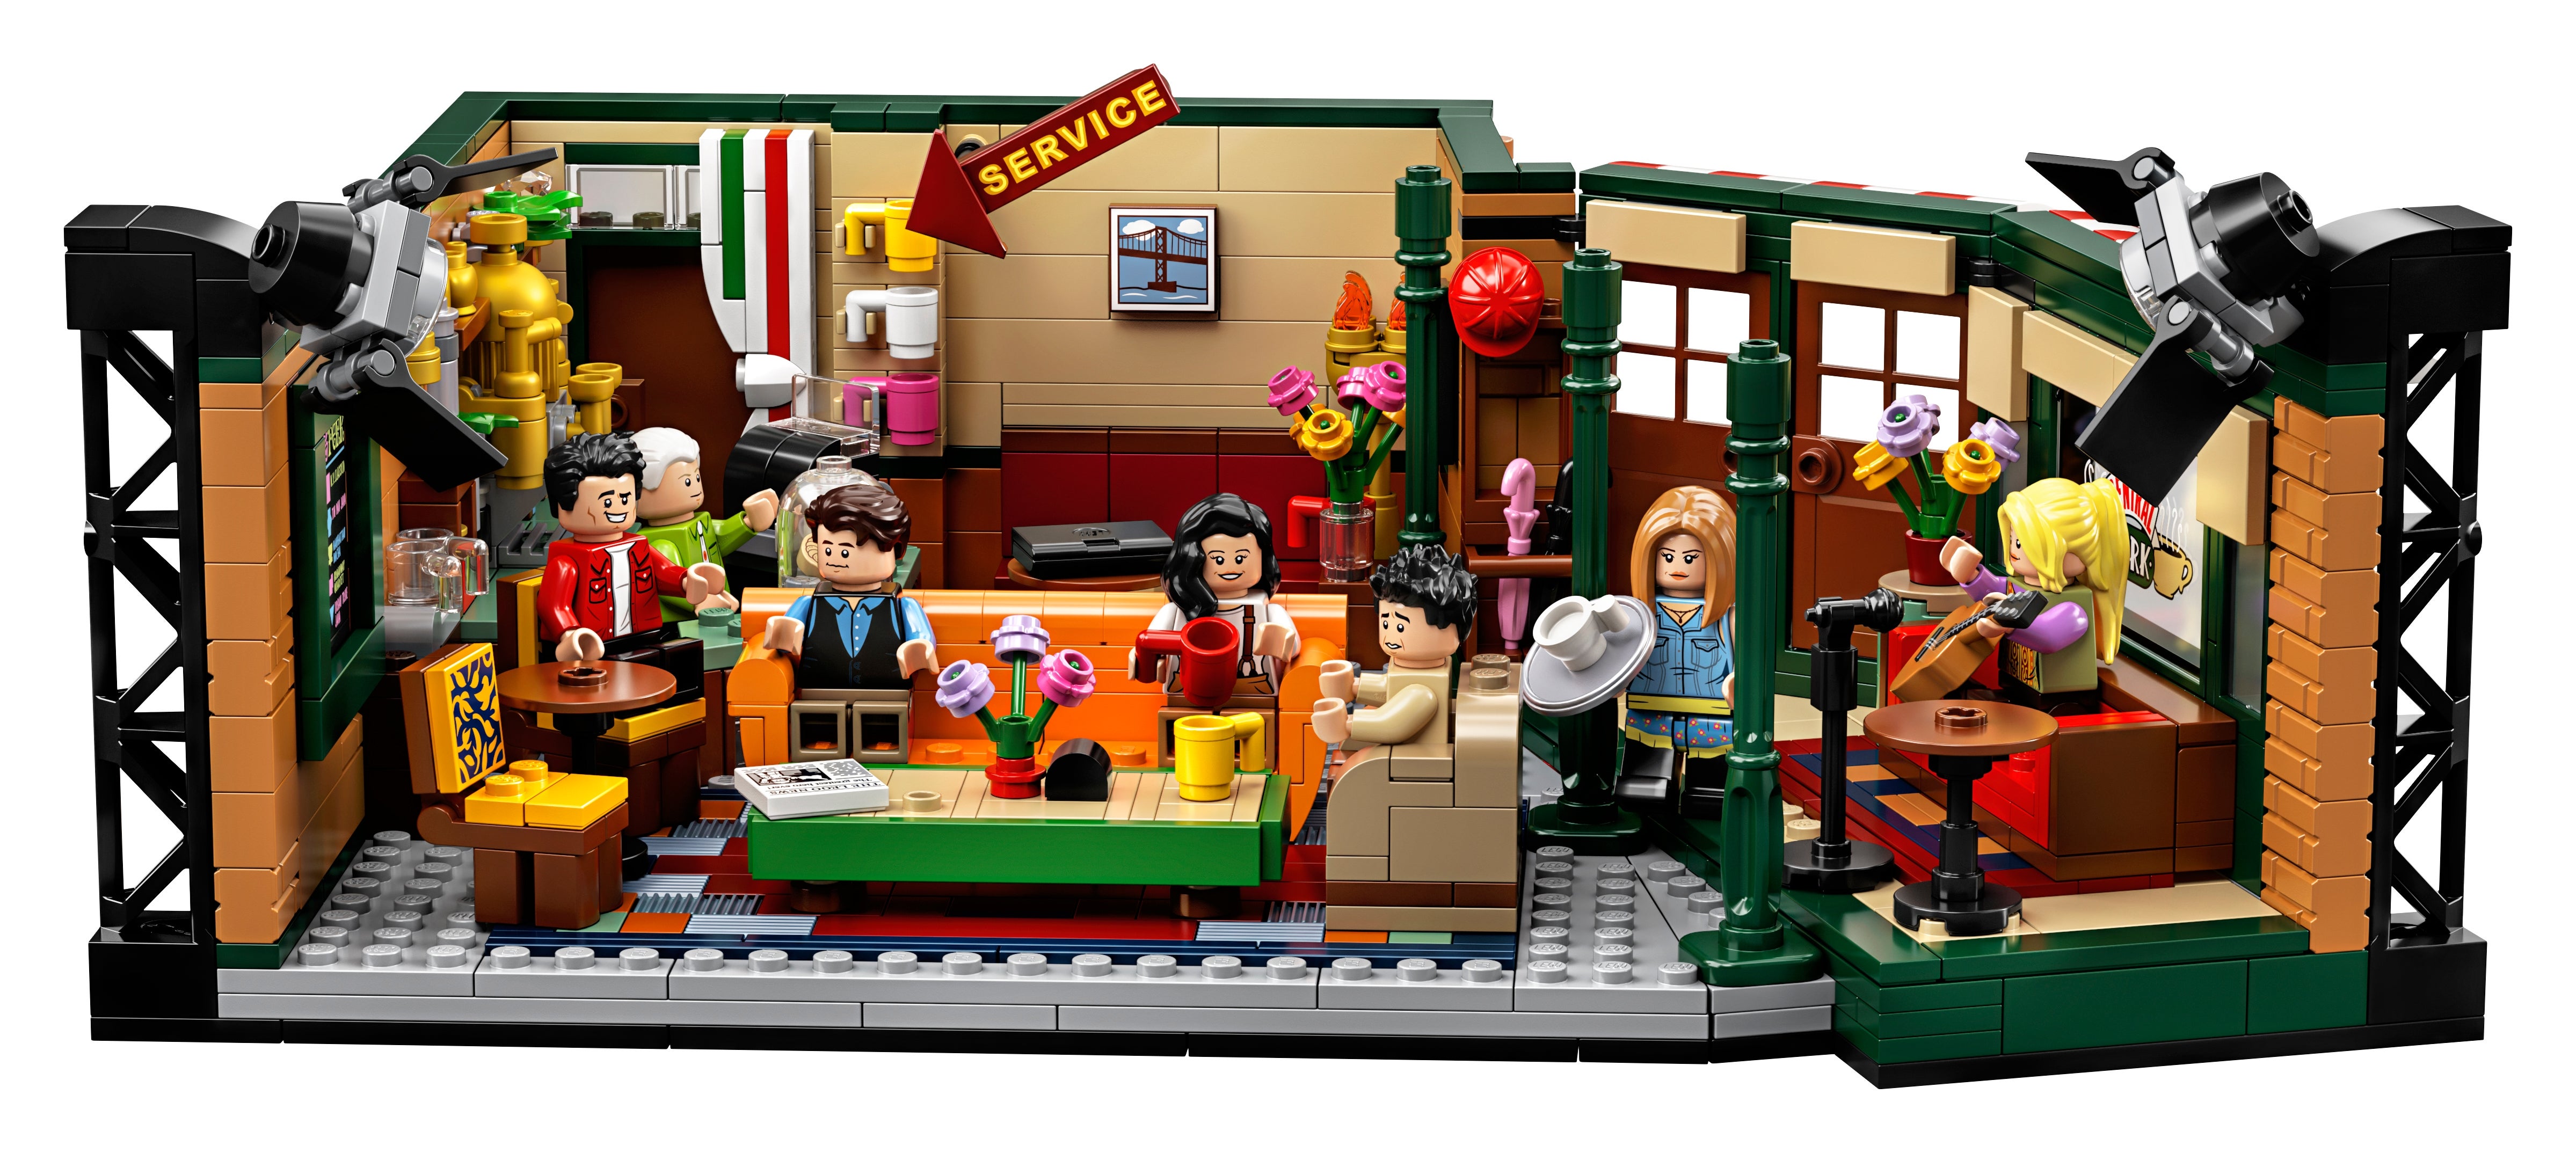 NEW GENUINE LEGO FRIENDS Central Perk Monica Geller Minifigure 21319 Mini Figure